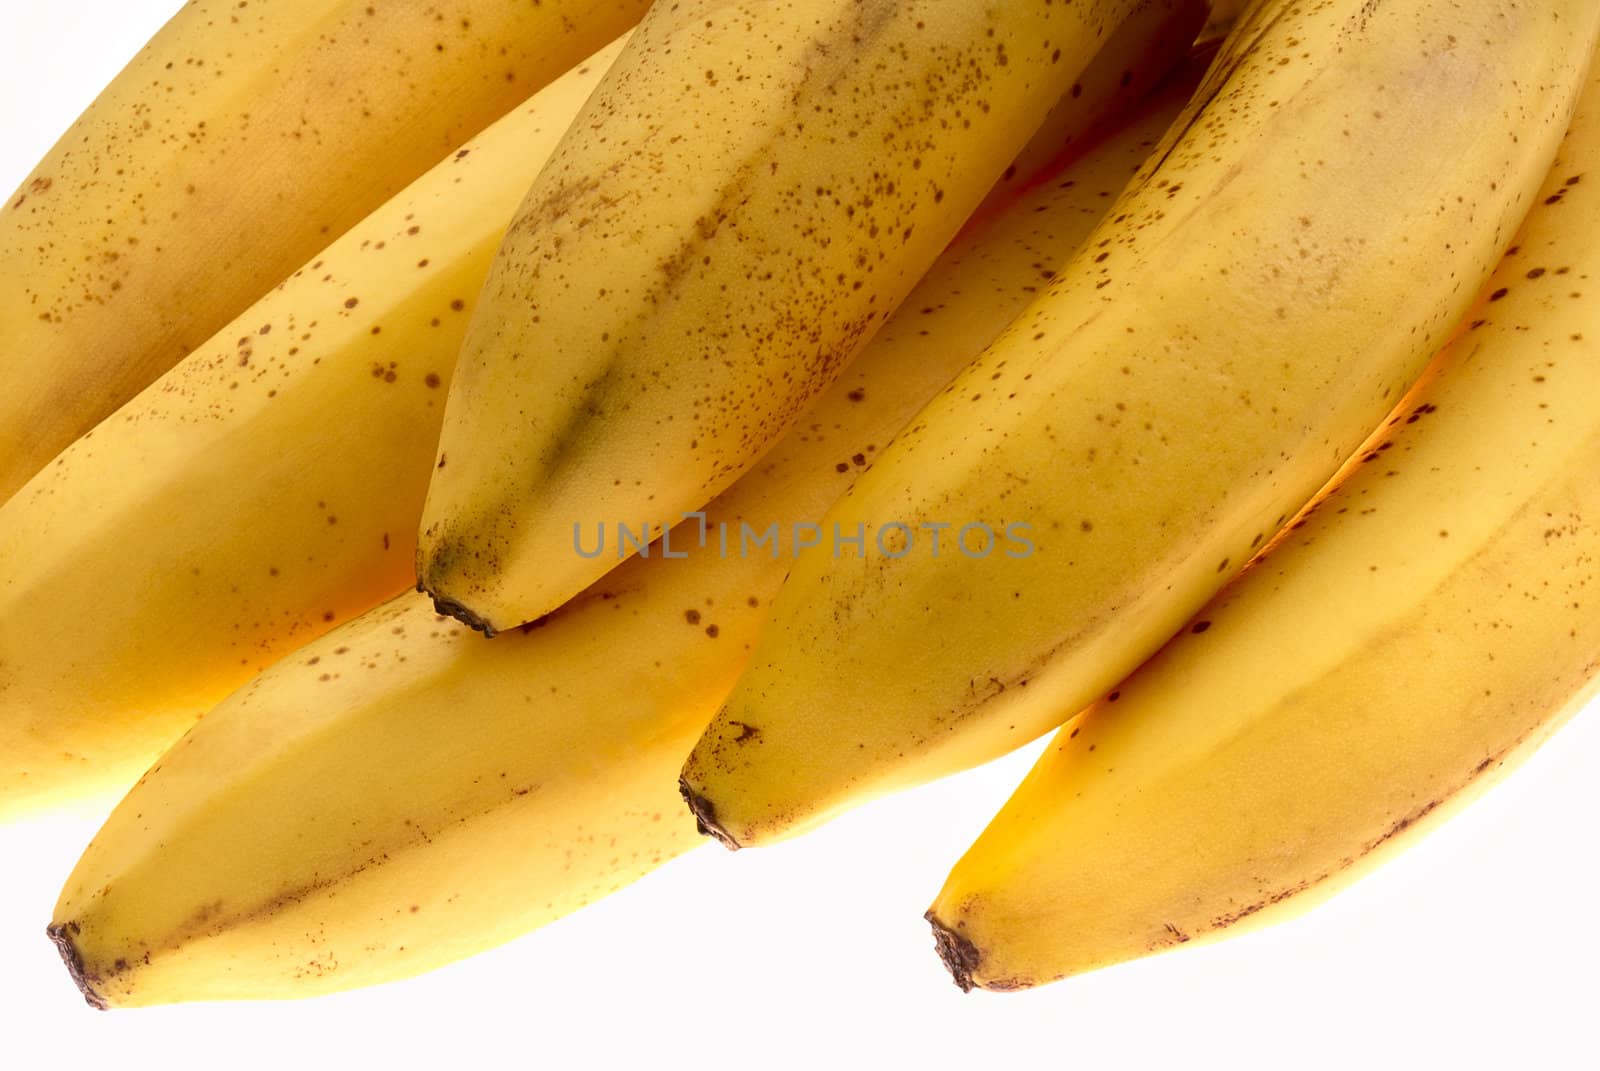 Overripe bananas by Kamensky